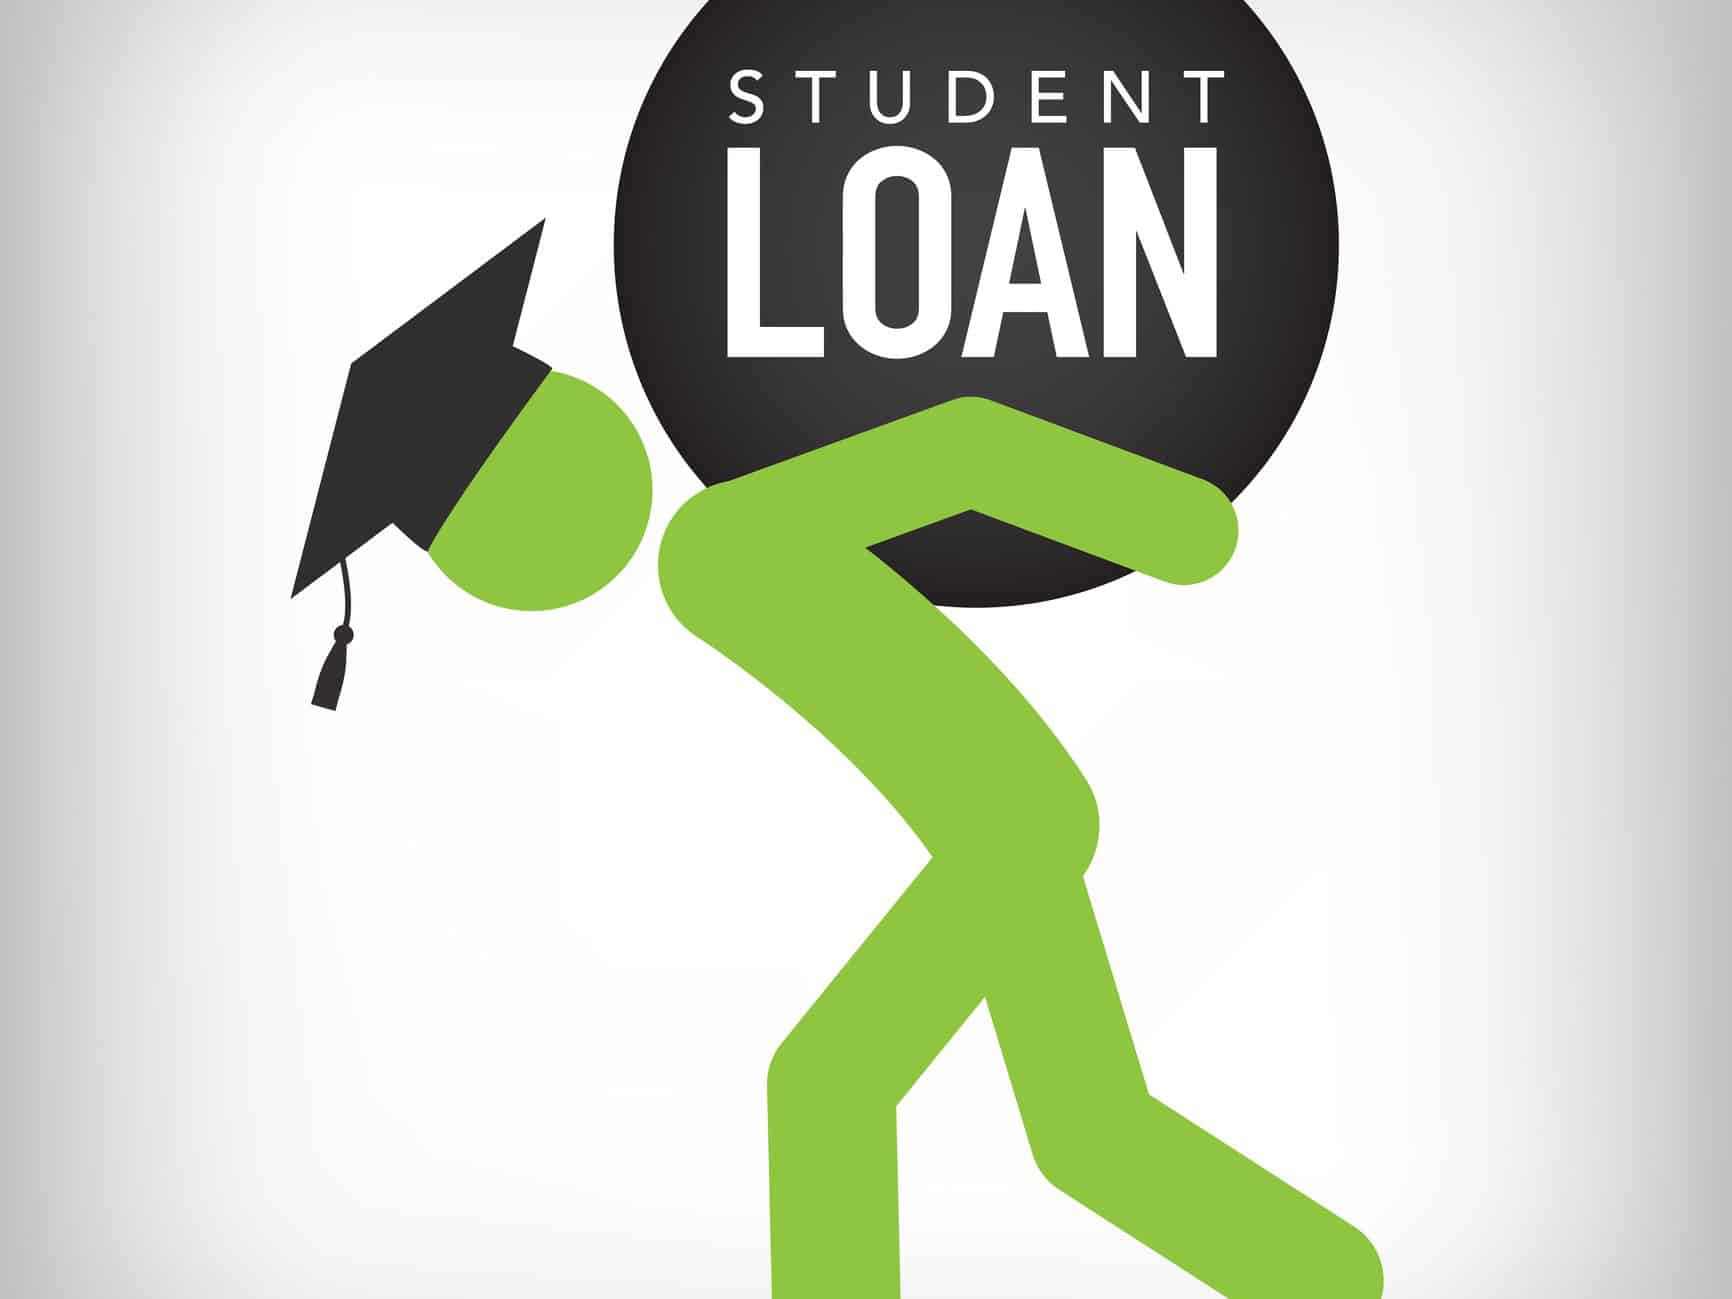 When Student Loan Payments Restart Sherman Wealth Management